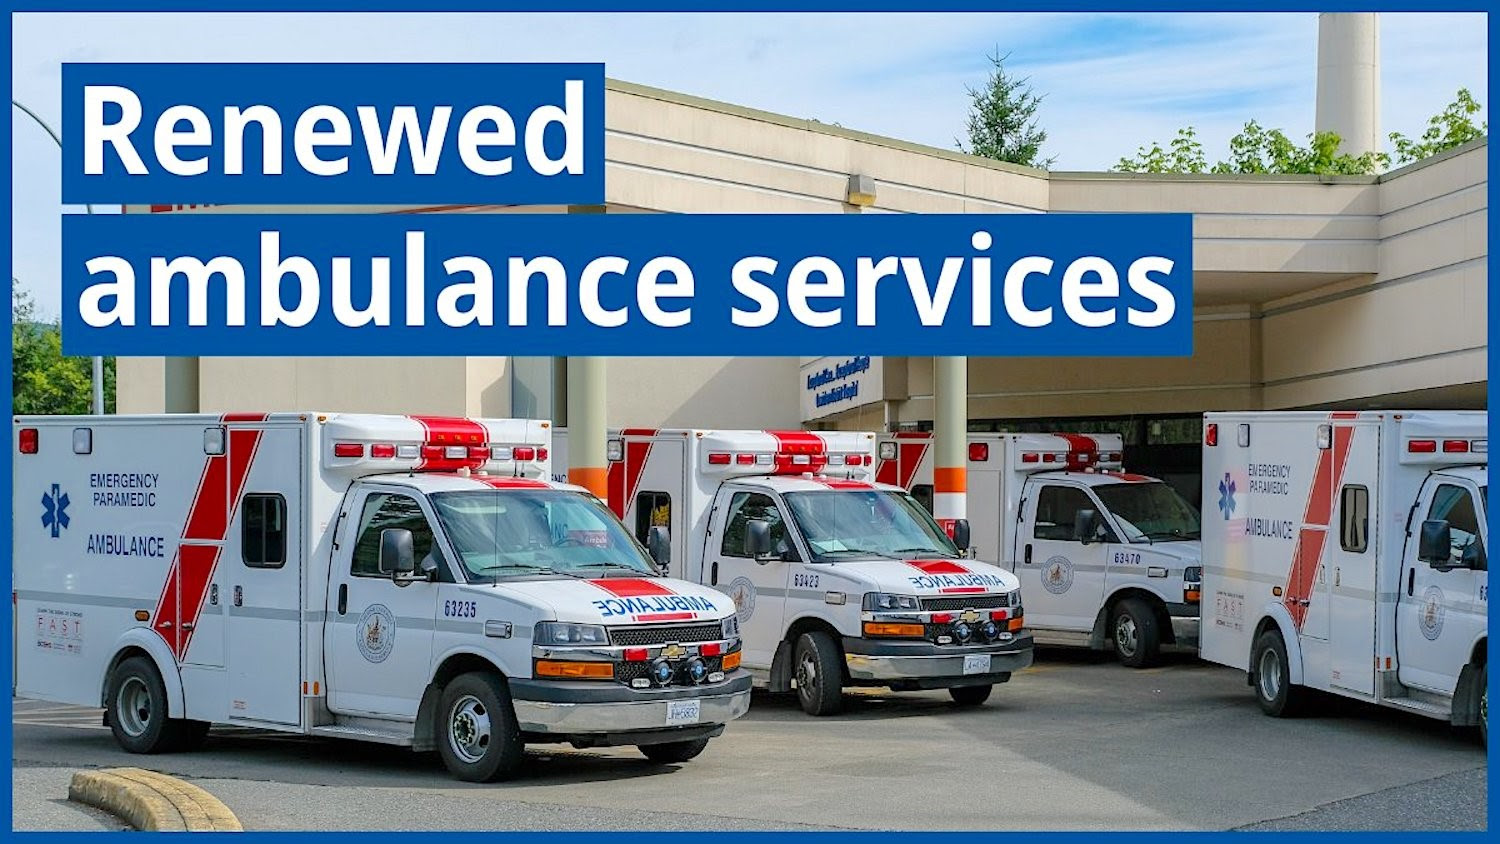 MLA announces new funding for ambulances